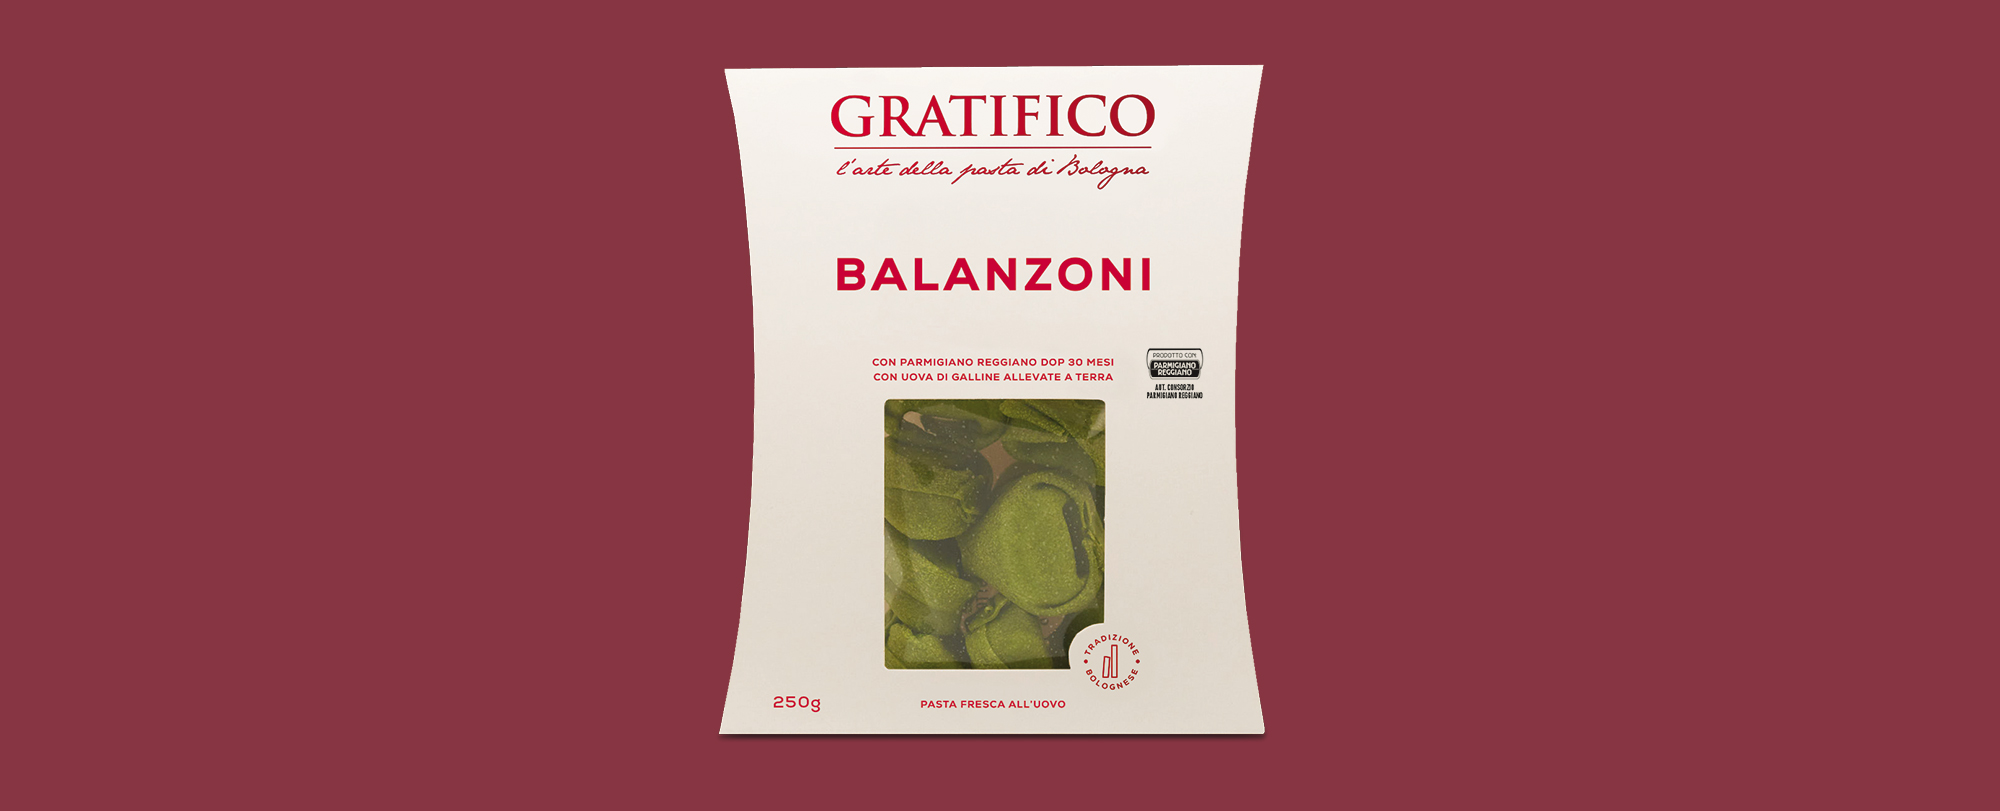 balanzoni-Maquette de l'emballage